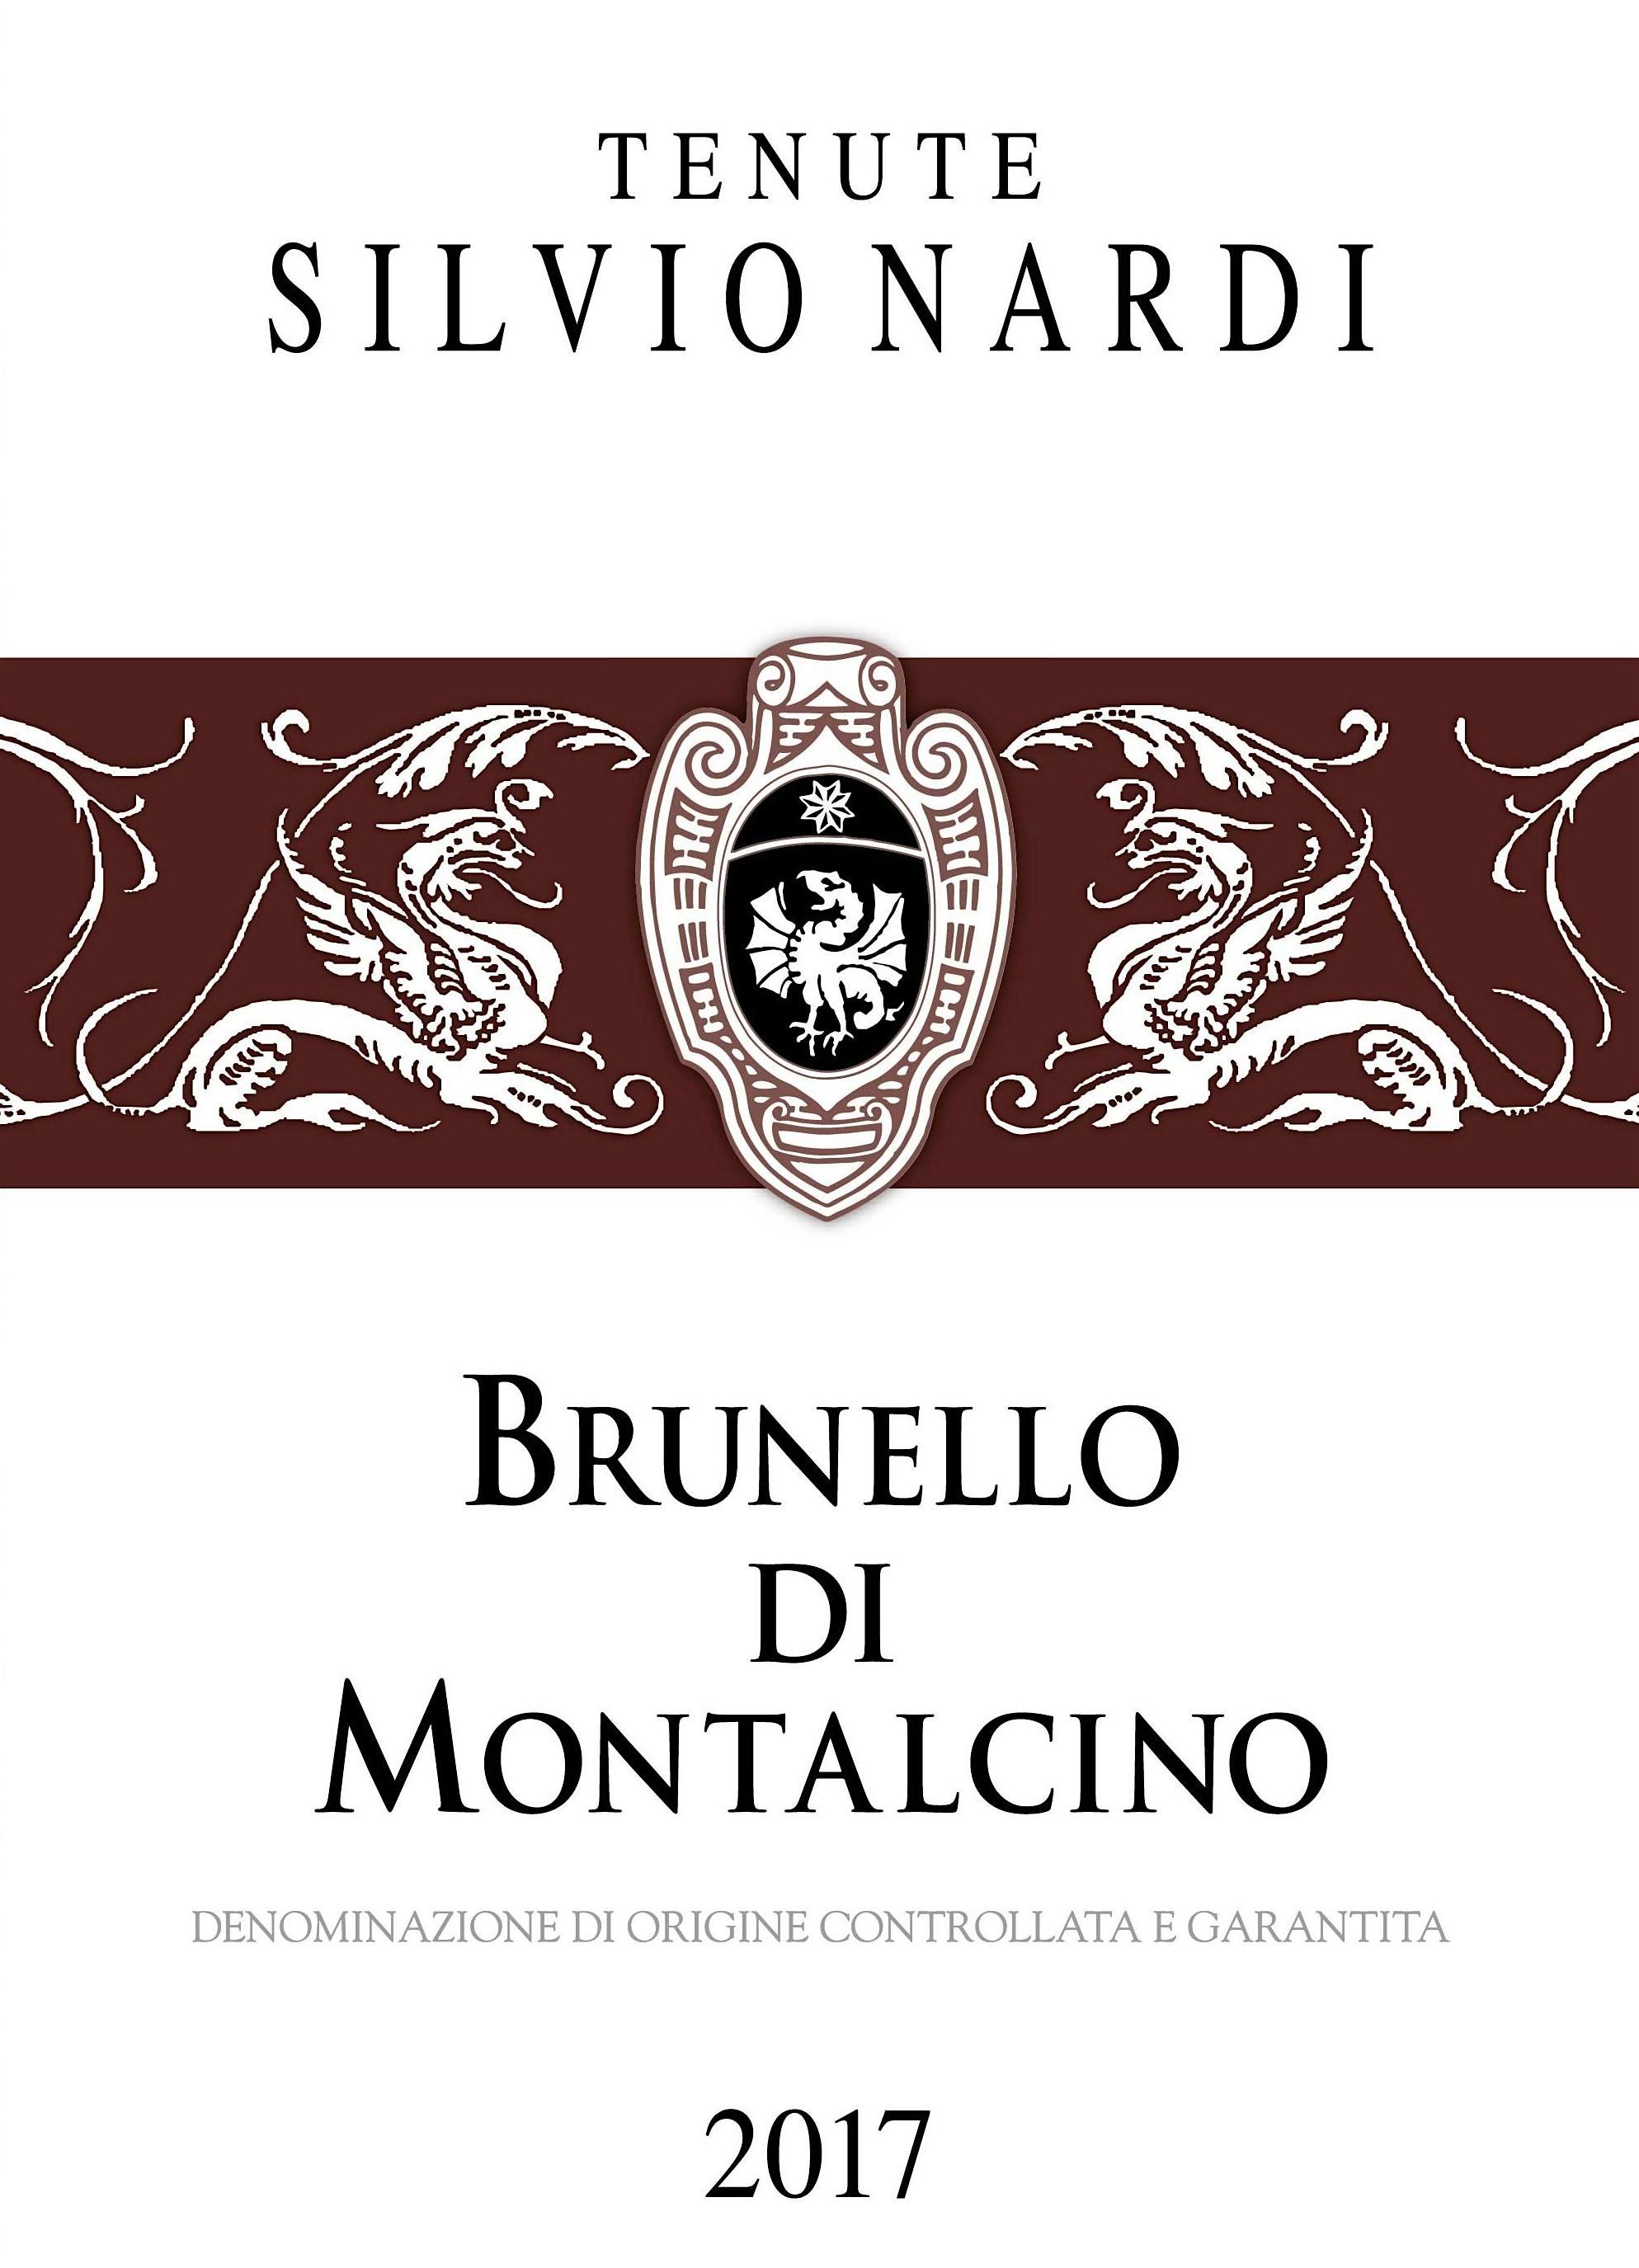 Label for Silvio Nardi